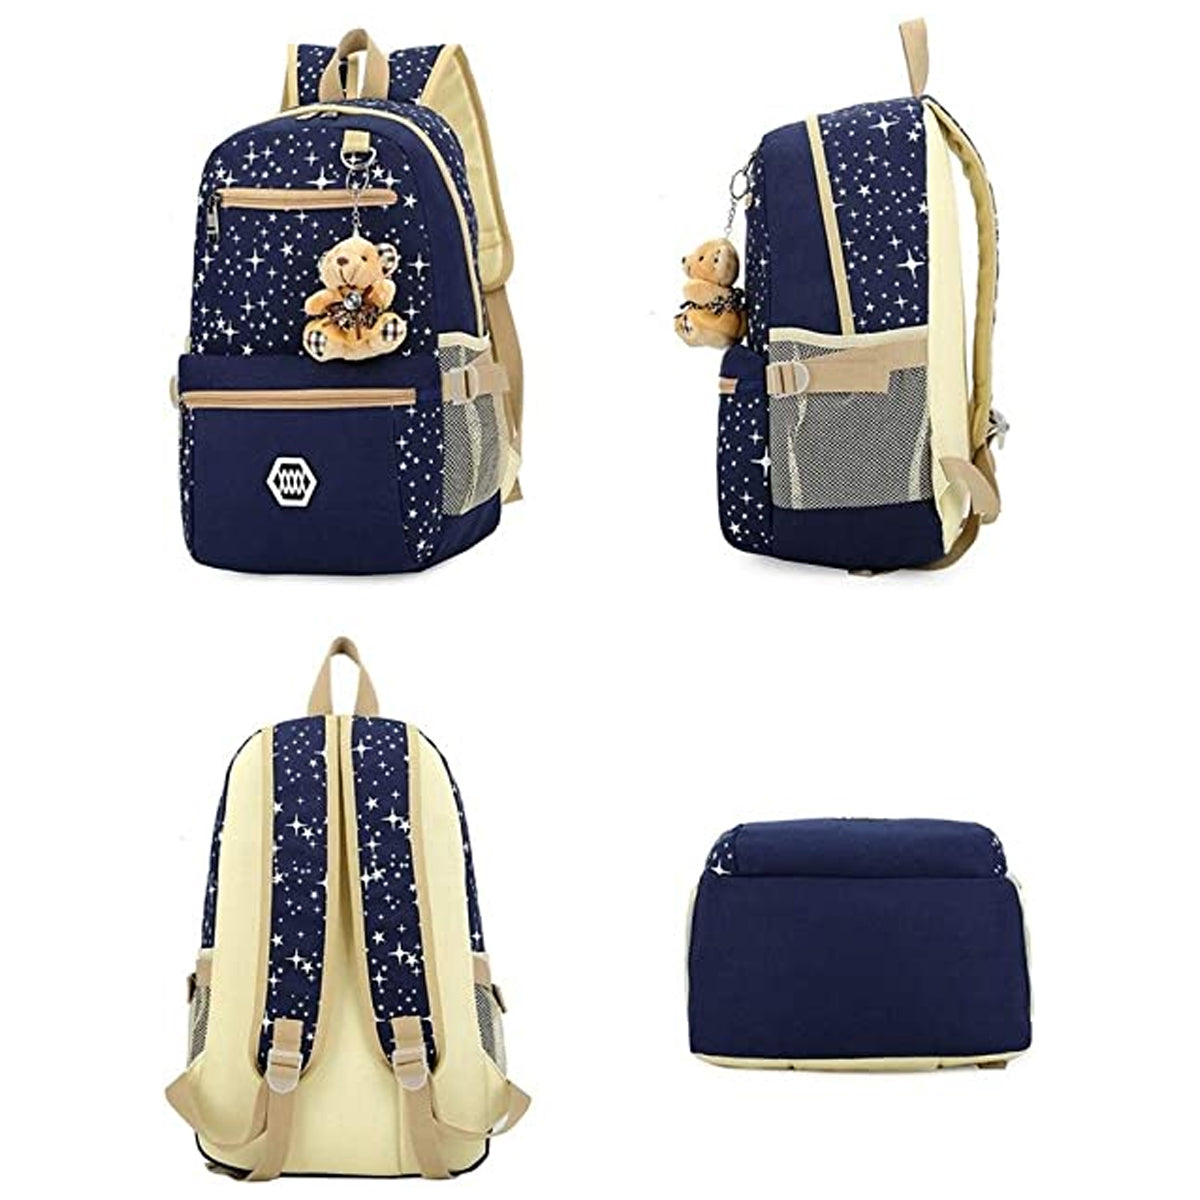 3 Pcs Star Print Girls Canvas Backpacks Set for School